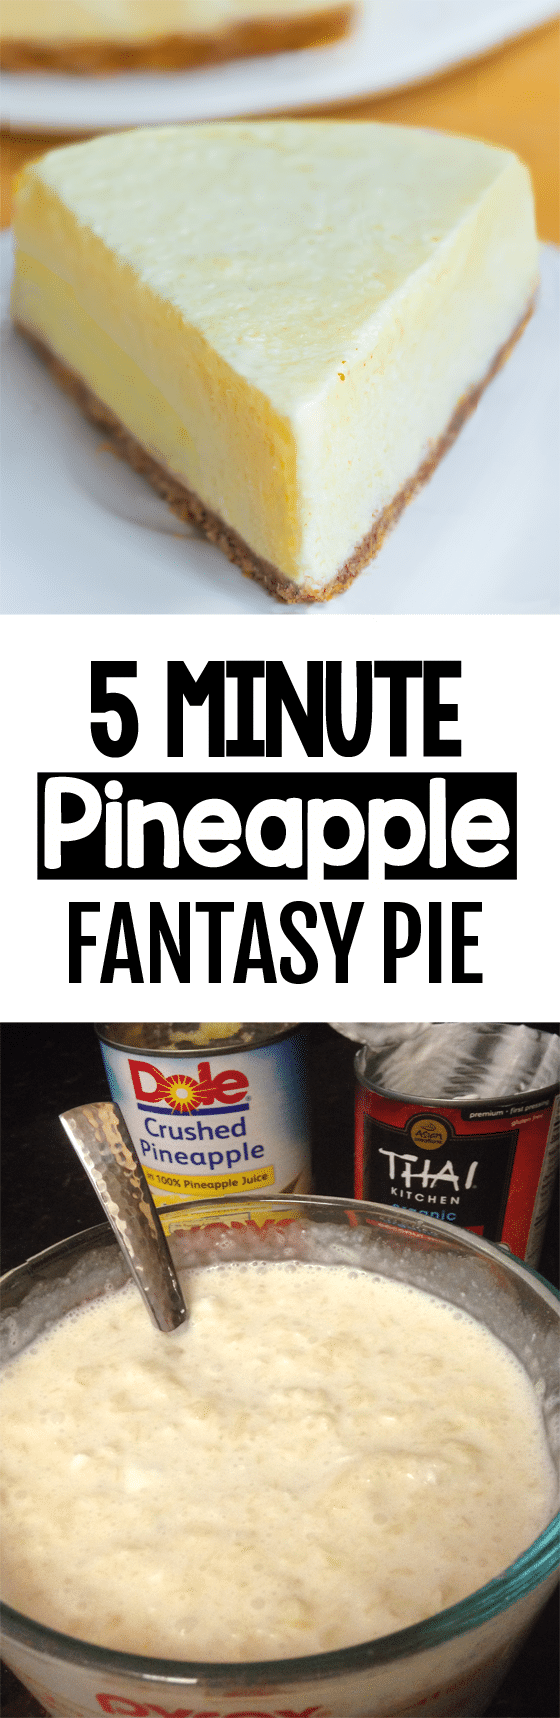 5 Minute Pineapple Fantasy Pie Recipe